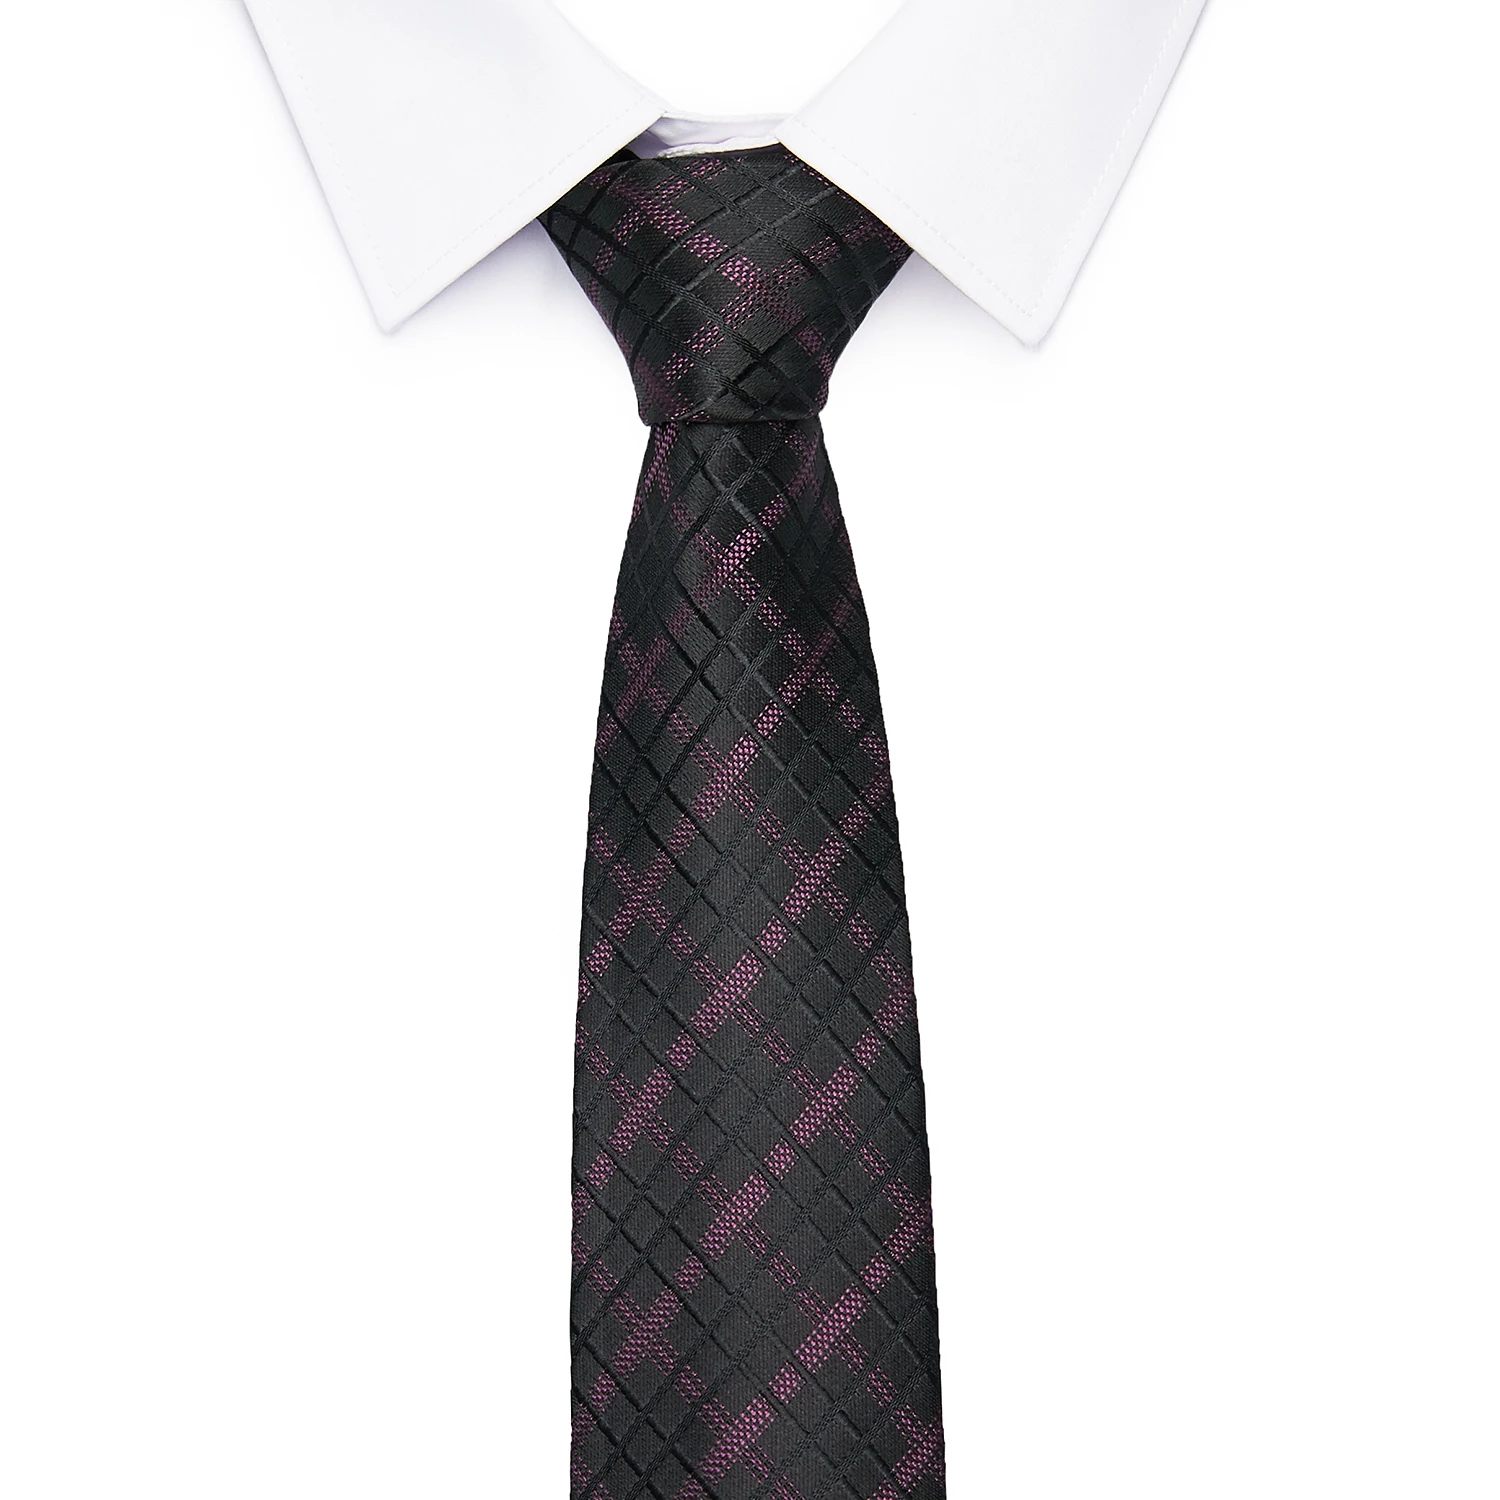  Gift for Men Tie Set Fashion plaid paisley jacquard tie &handkerchief&cufflinks&clip gift box set w